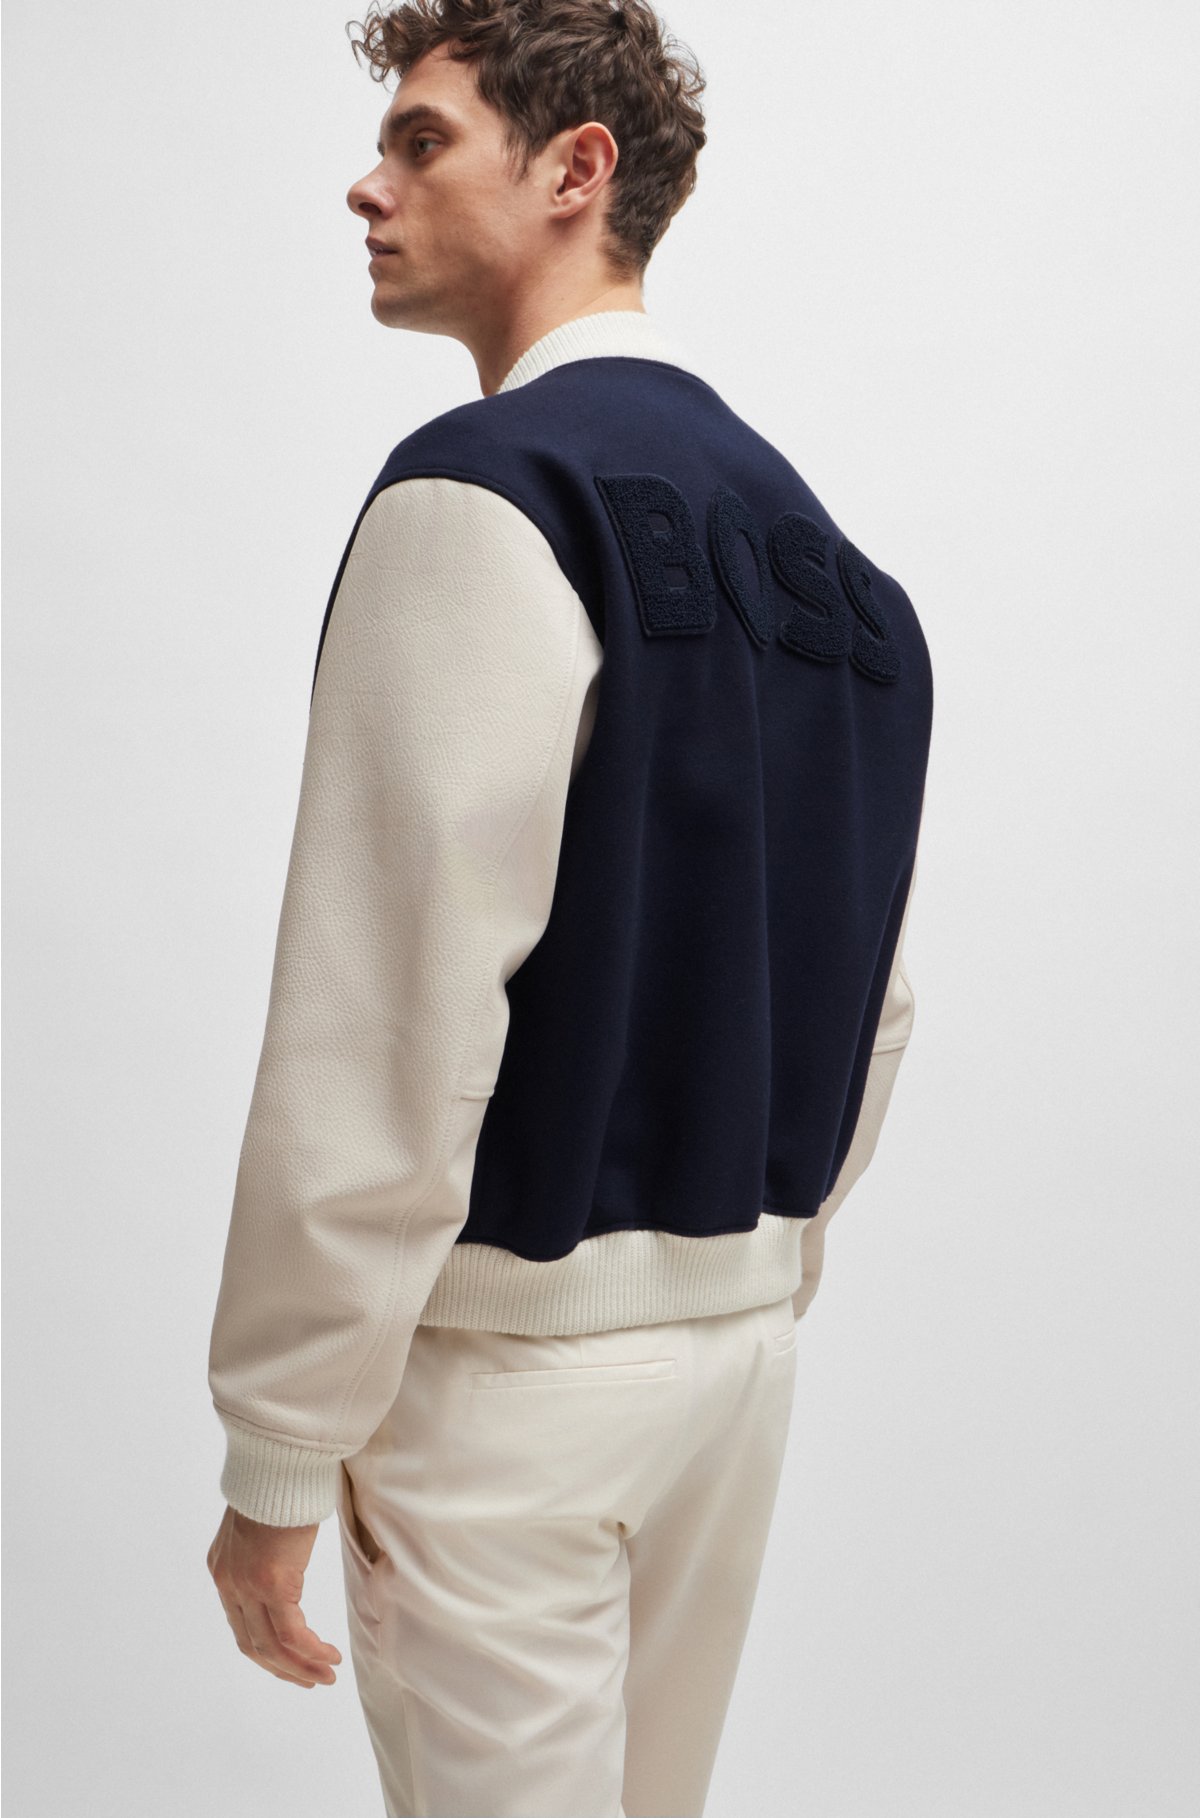 BOSS x Shohei Ohtani wool-blend baseball jacket with monogram details, White / Dark Blue